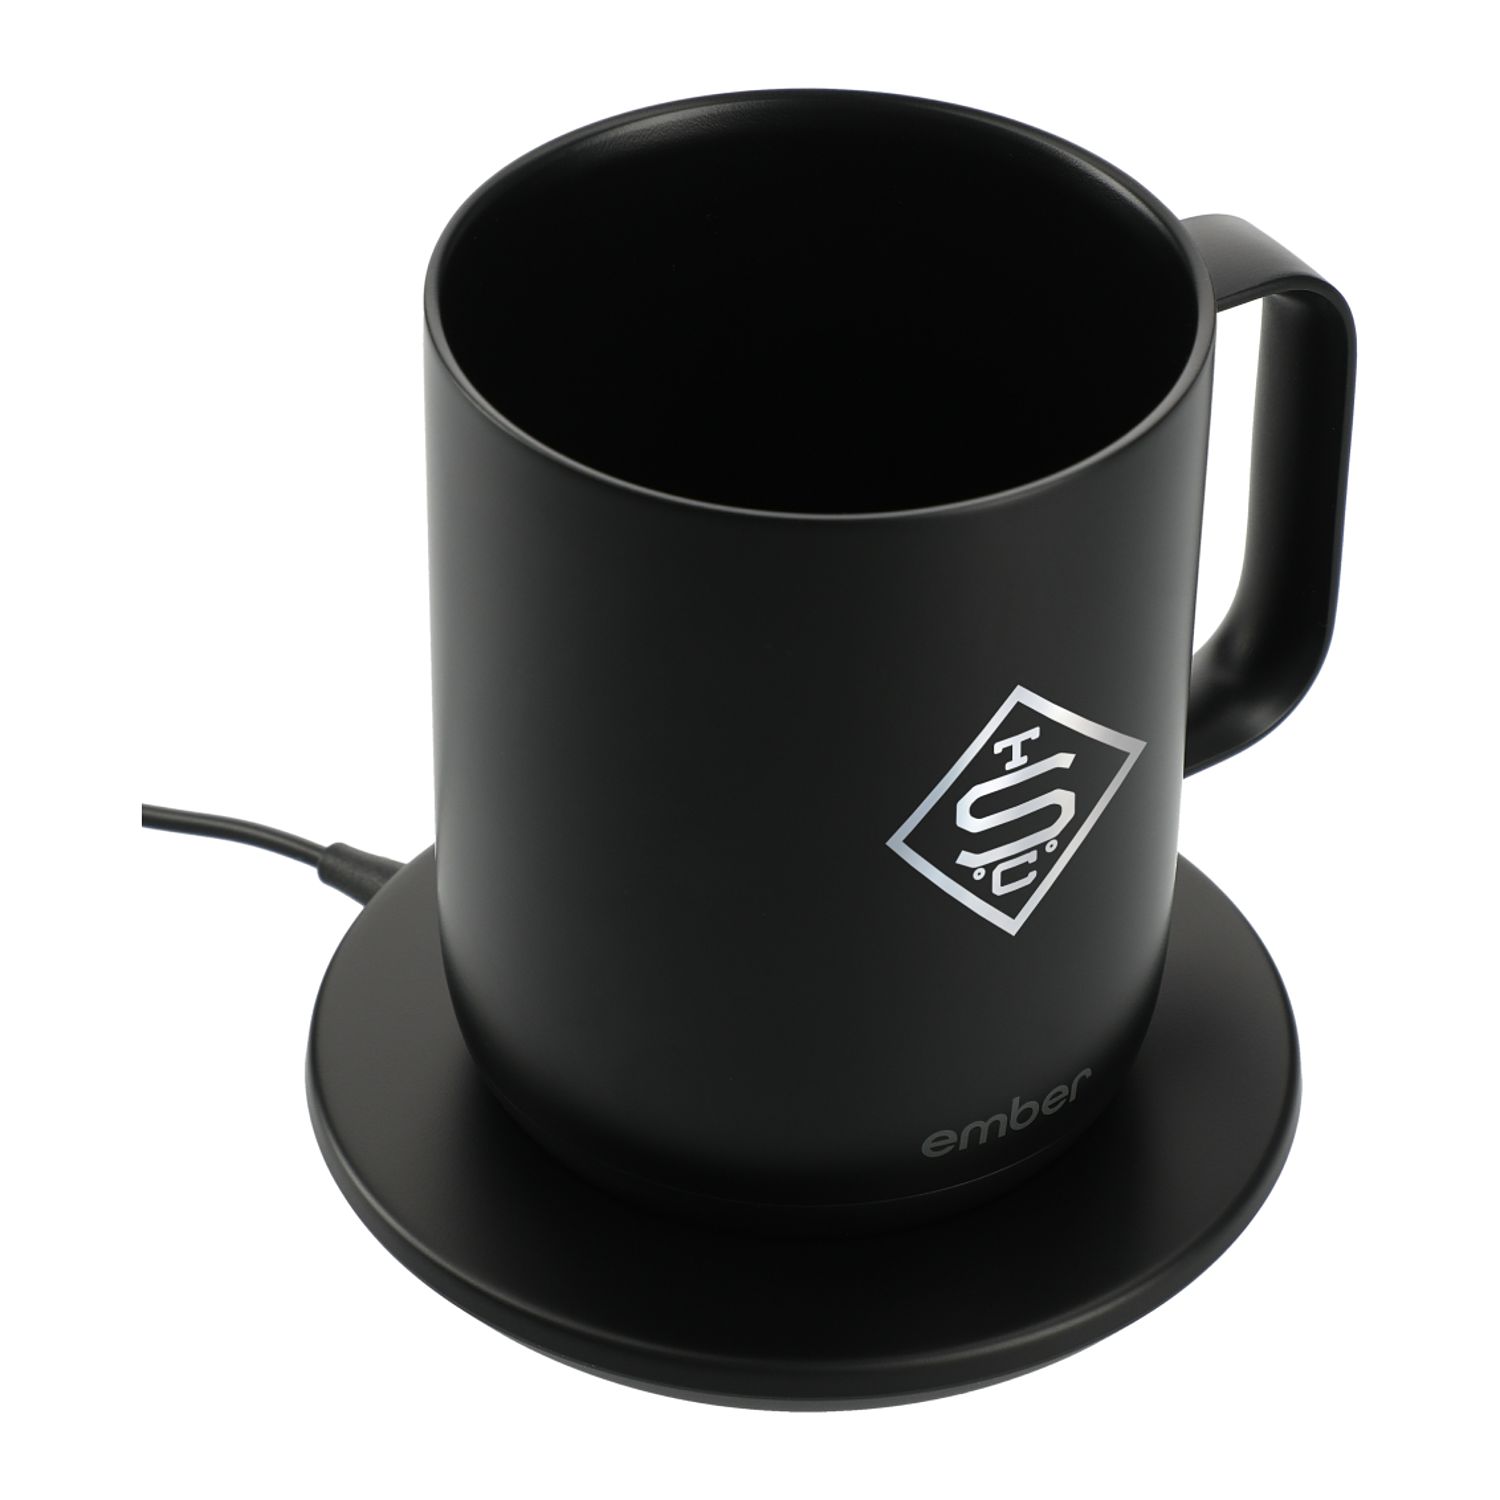 Temperature Control Smart Coffee Mug